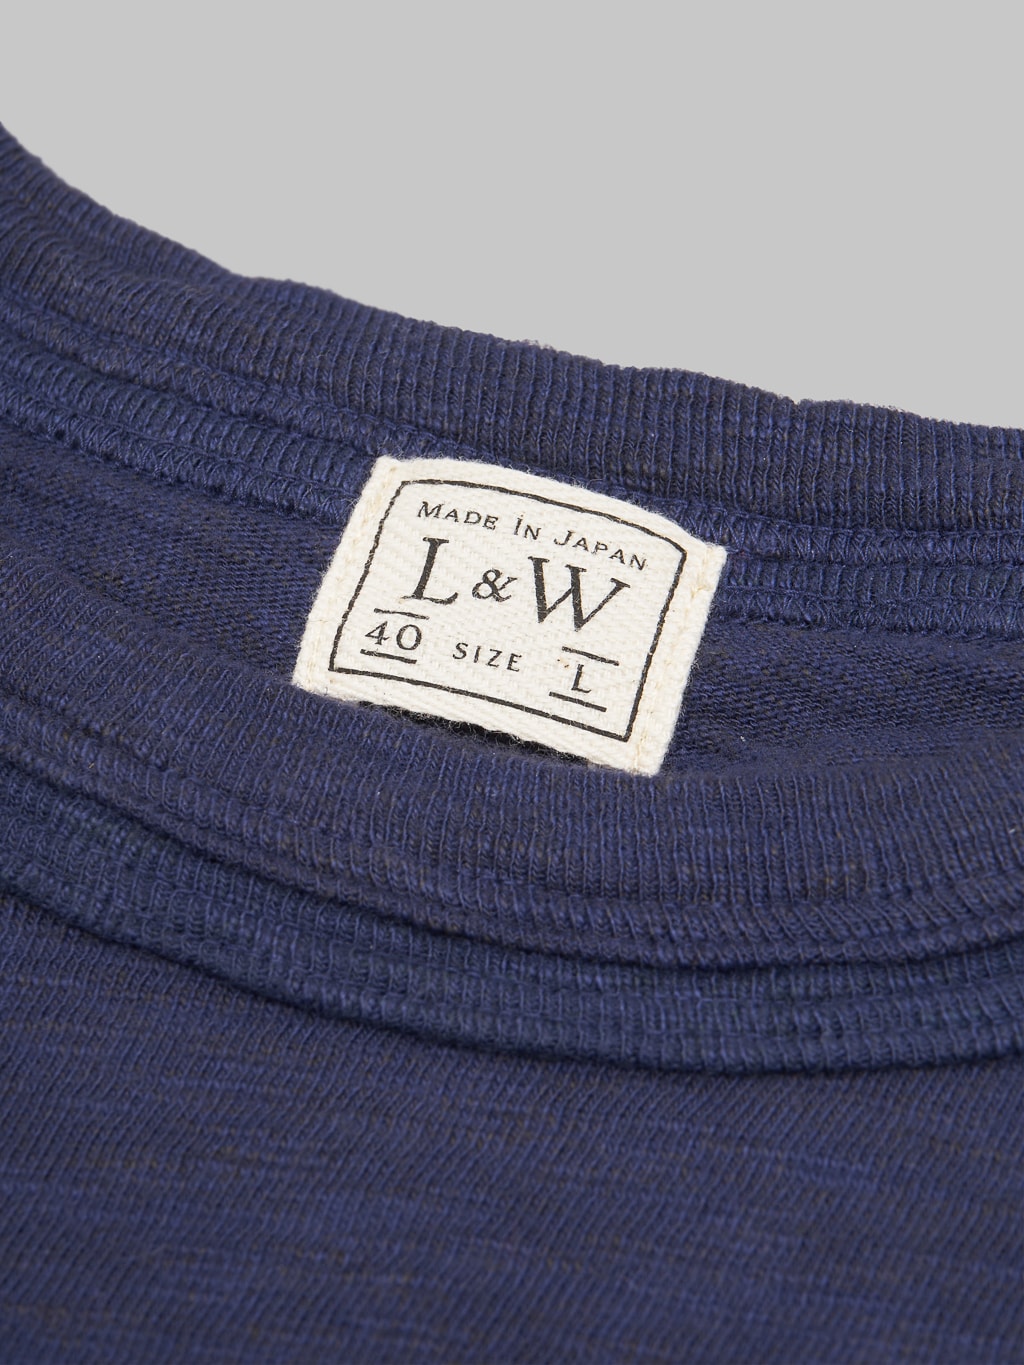 loop and weft double binder neck heather slub knit tshirt navy label